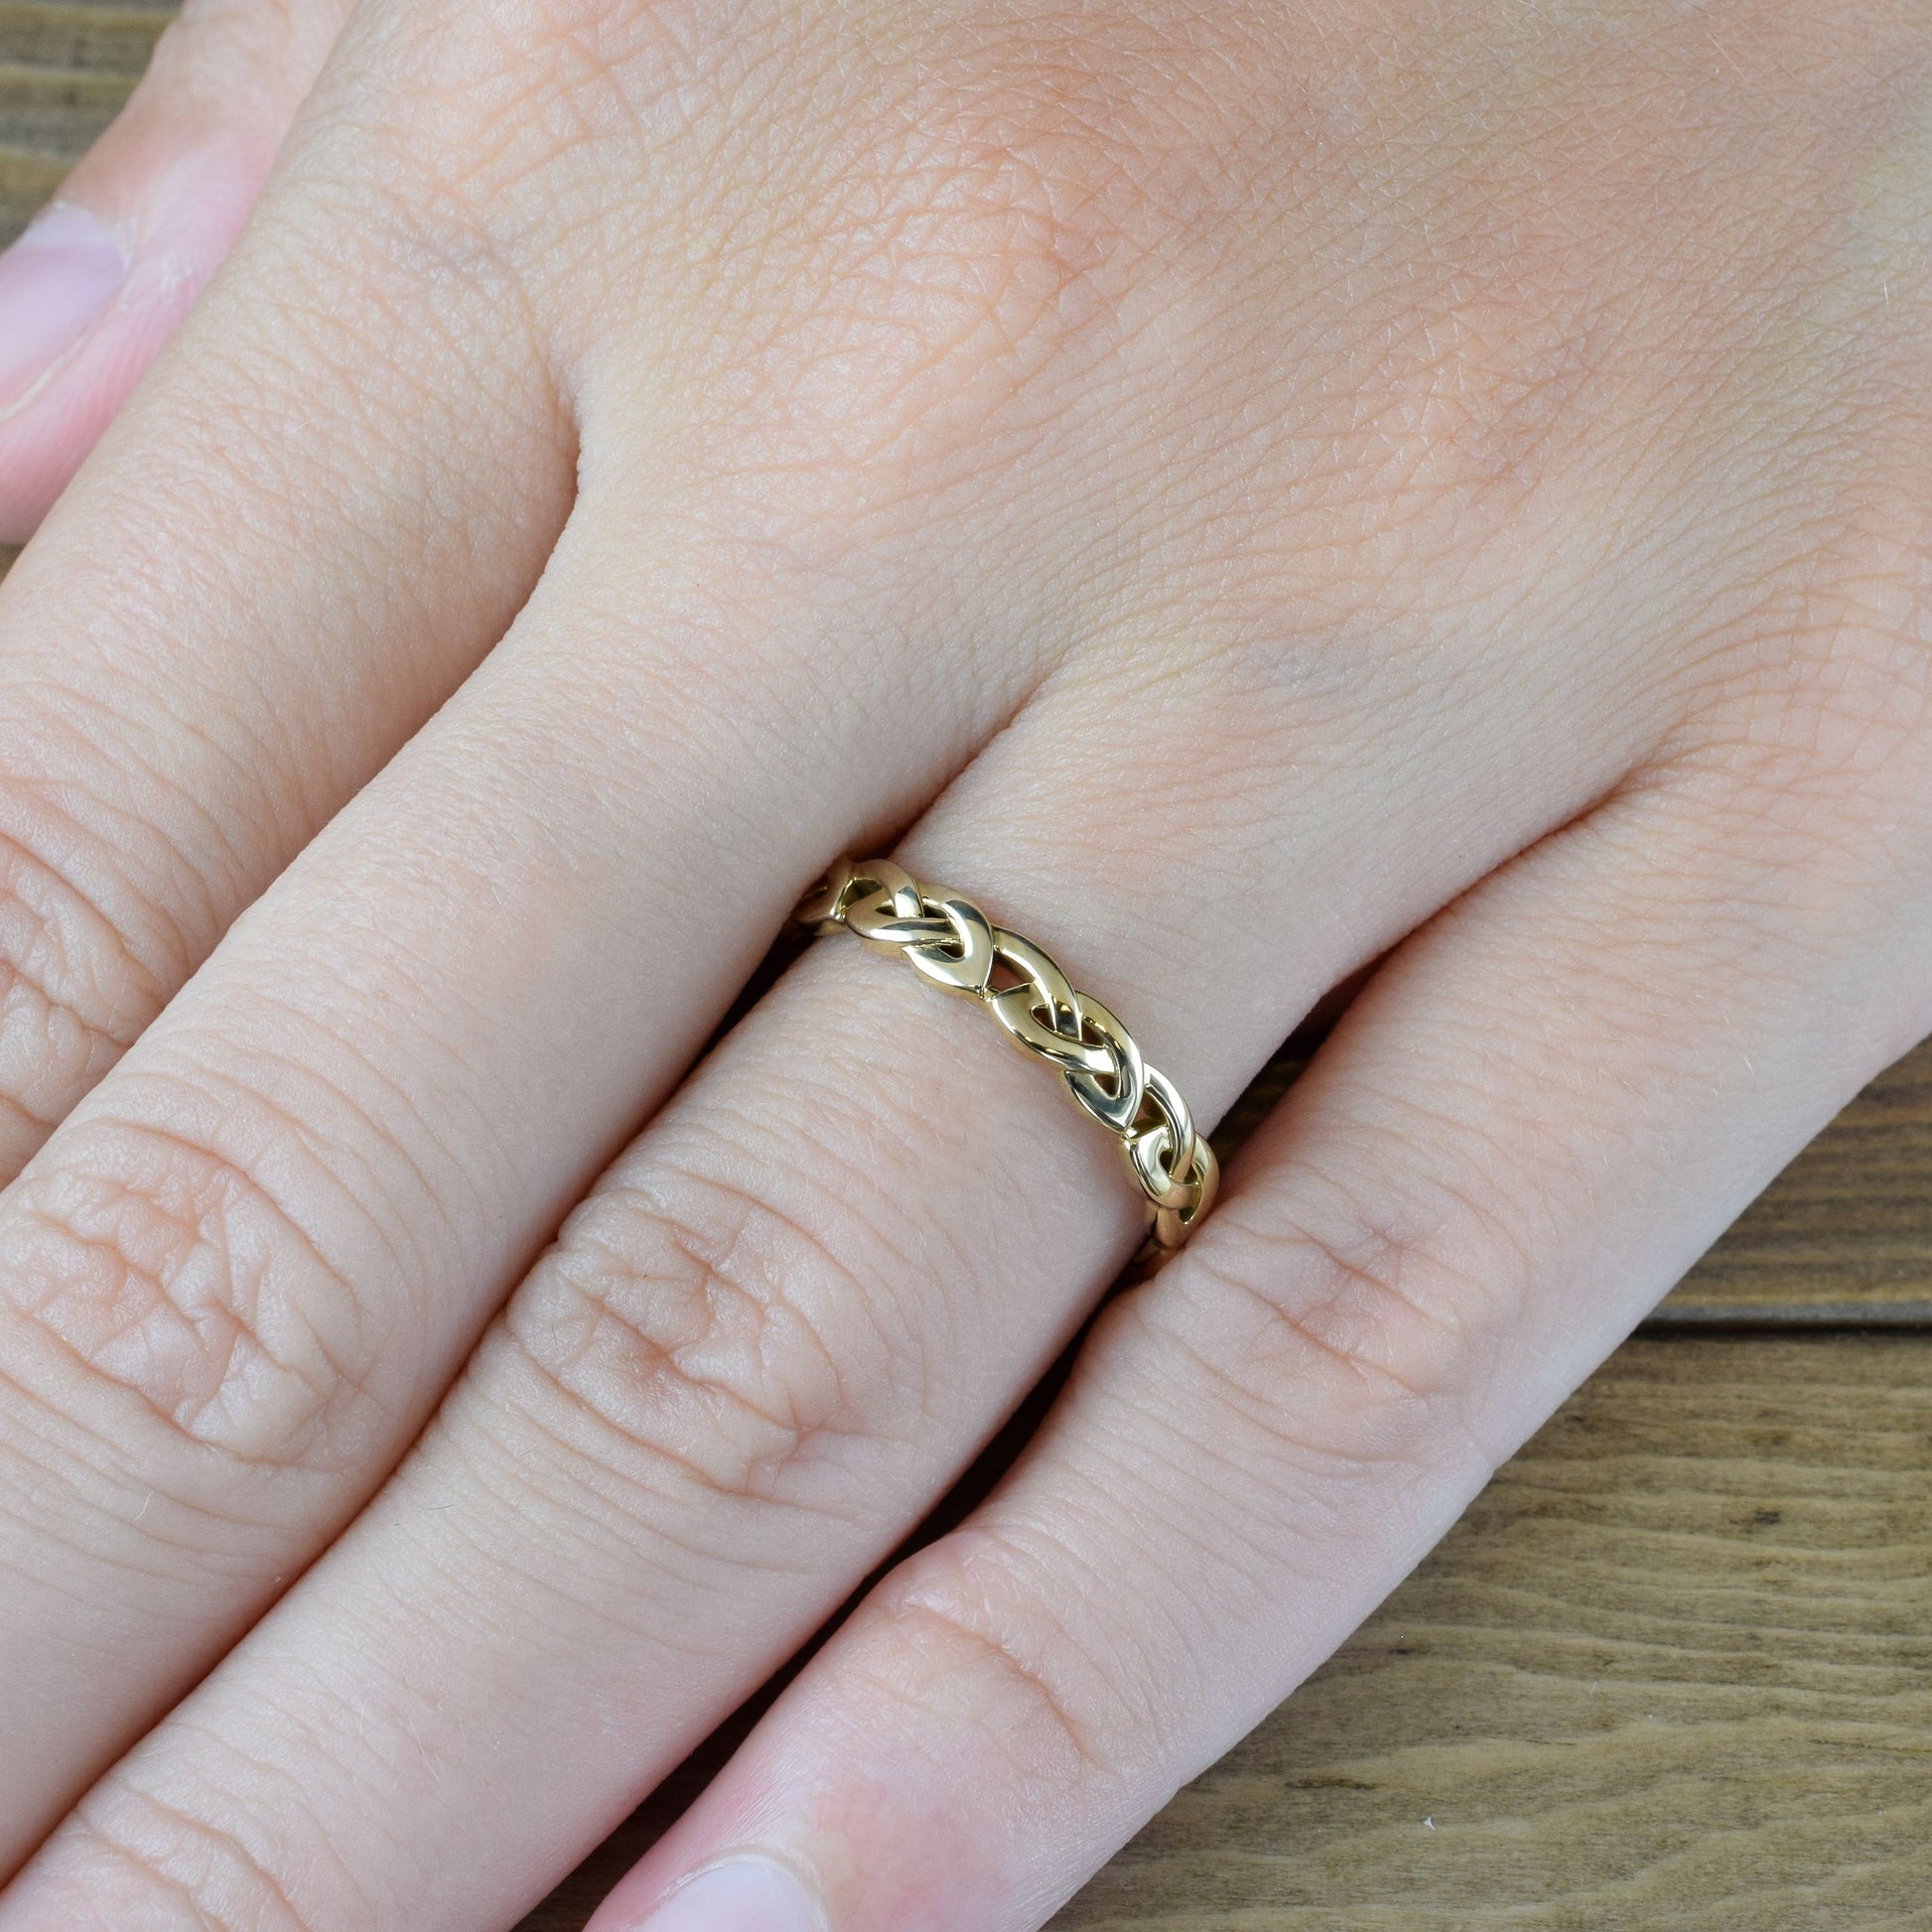 Overhand knot eternity ring, wedding band for women in 14k or 18k gold on finger